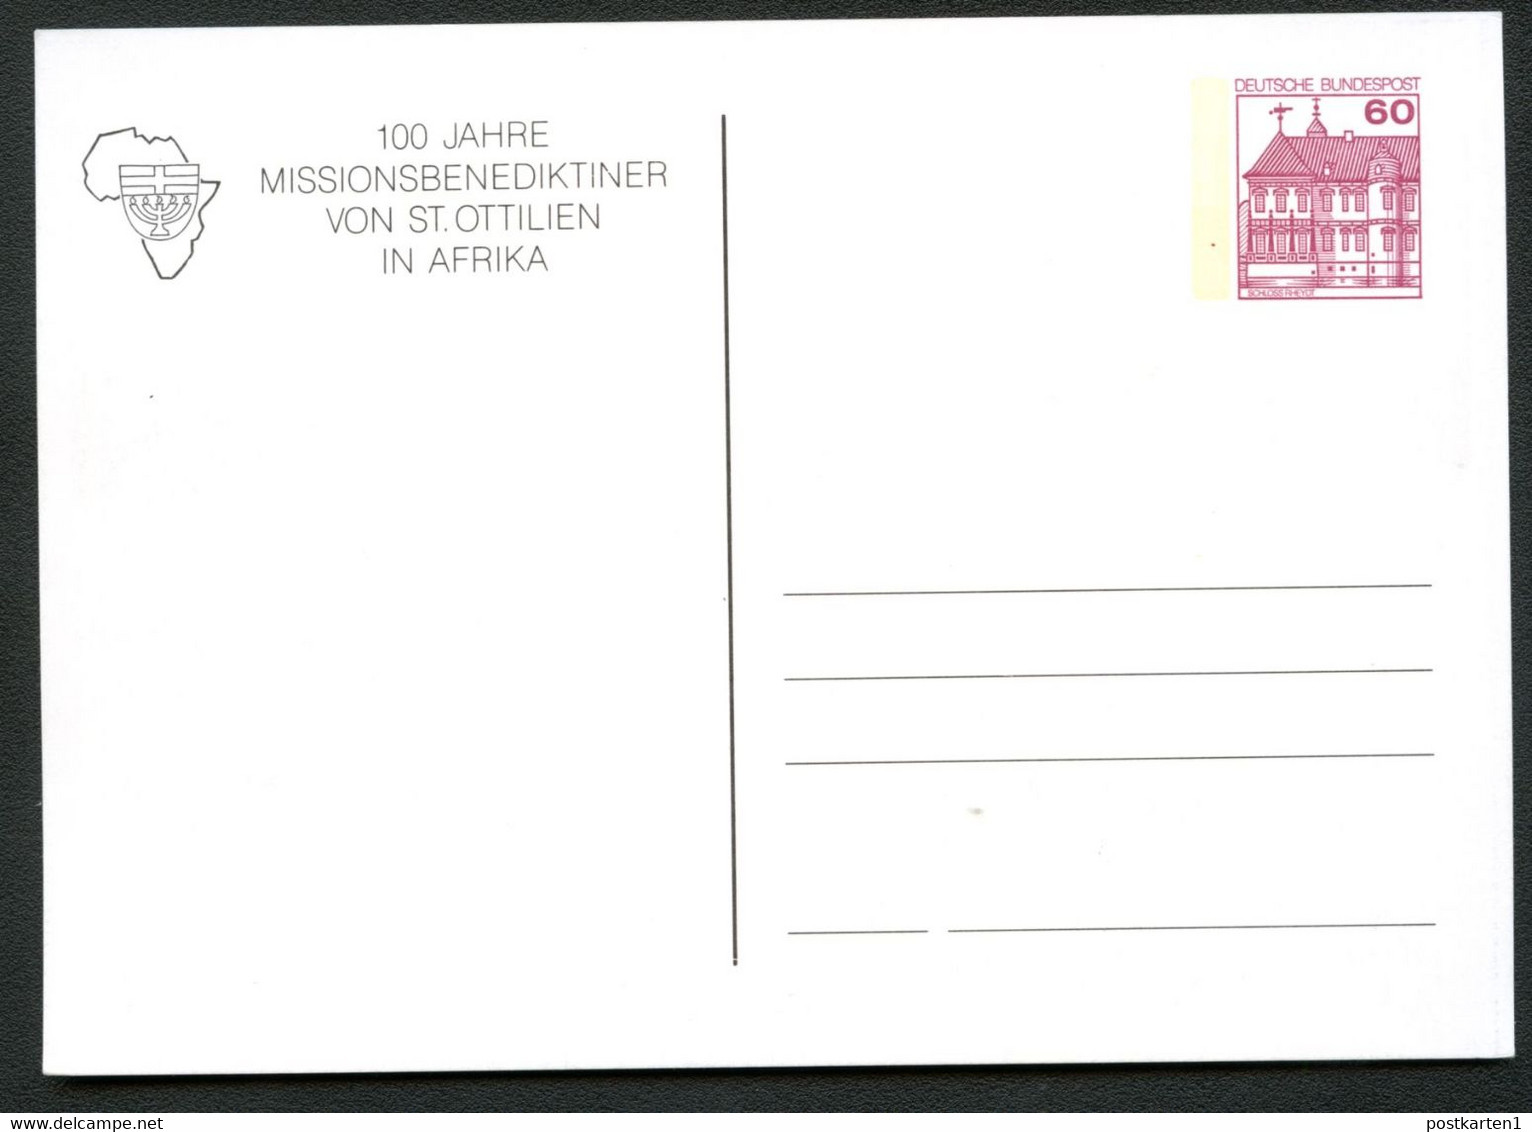 Bund PP106 B2/053 MISSIONSBENEDIKTINER AFRIKA DARESSALAM St. Ottilien 1987 - Postales Privados - Nuevos